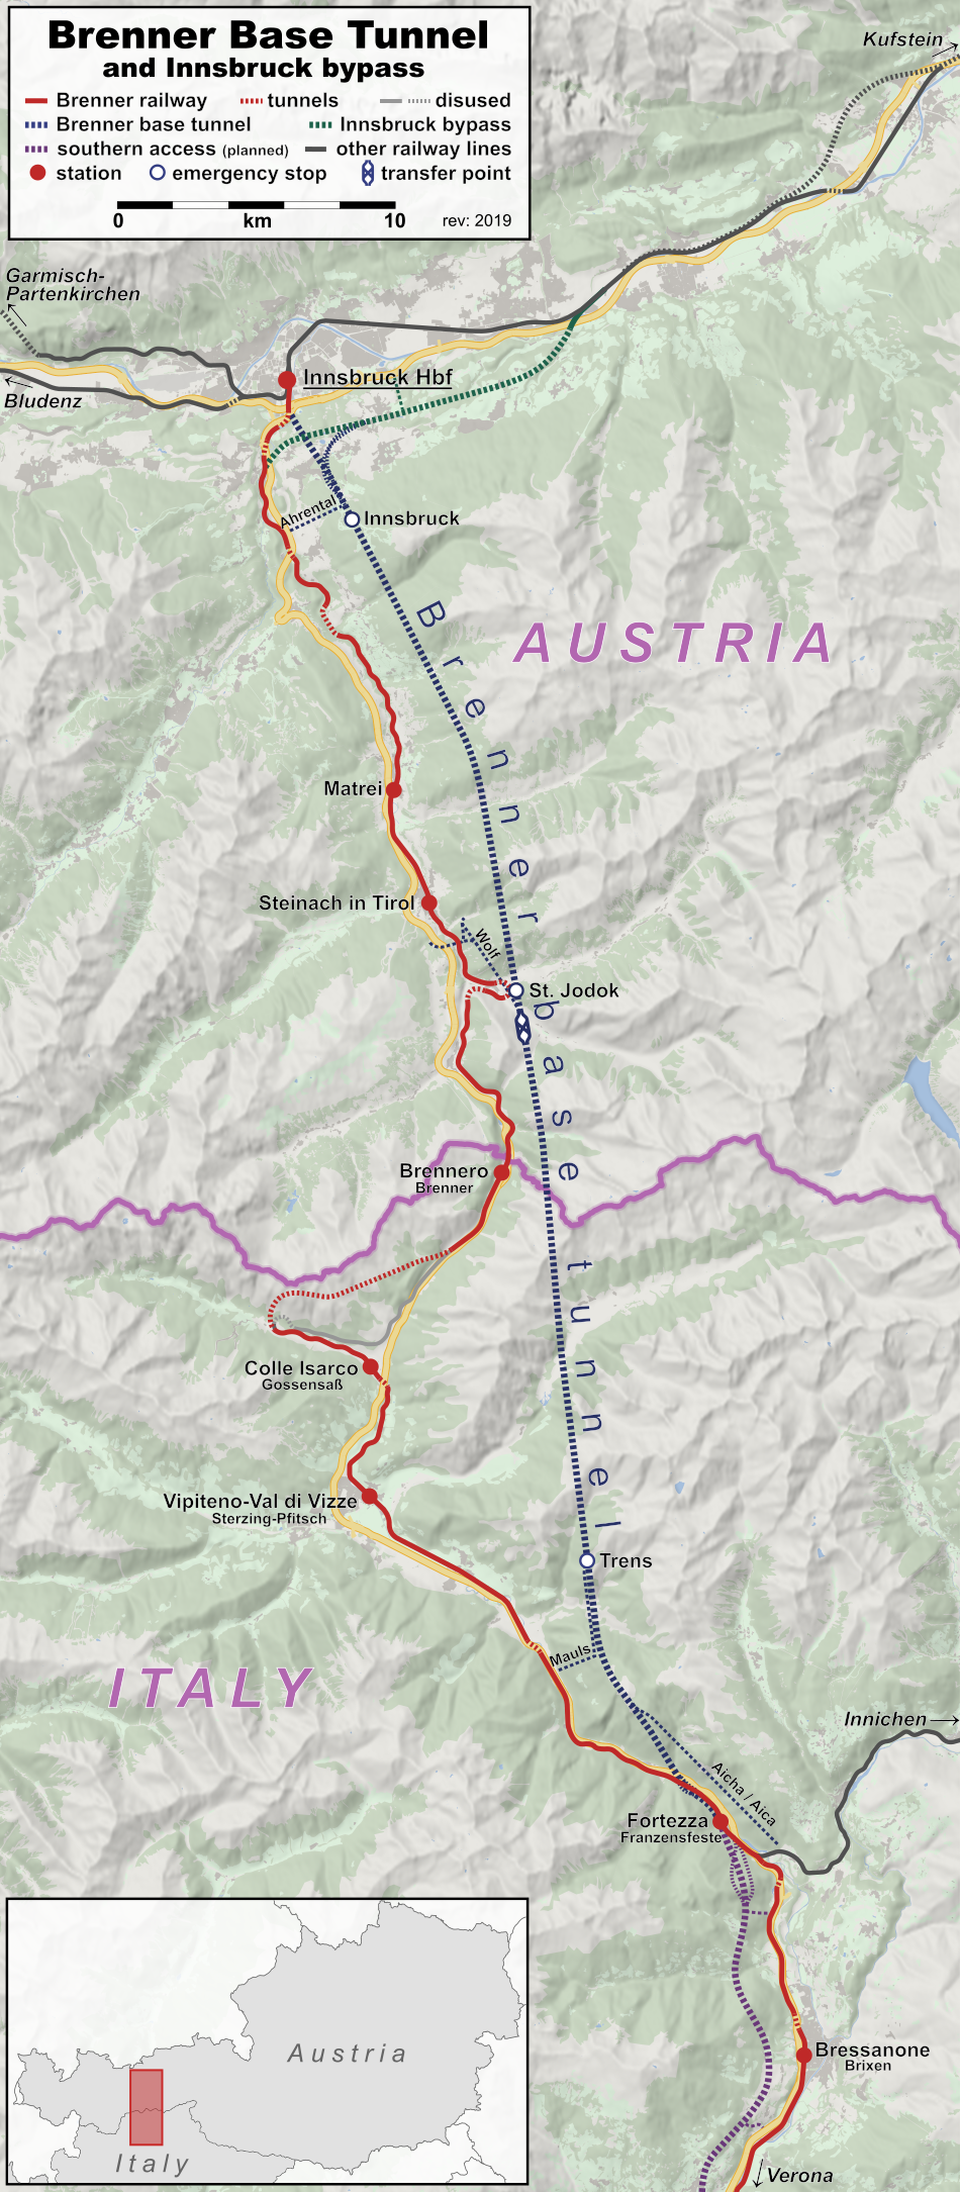 A Brenner bázisalagút tervezett vonala – forrás: WikiMedia Commons | Hbf878, OpenStreetMap contributors, Lencer
